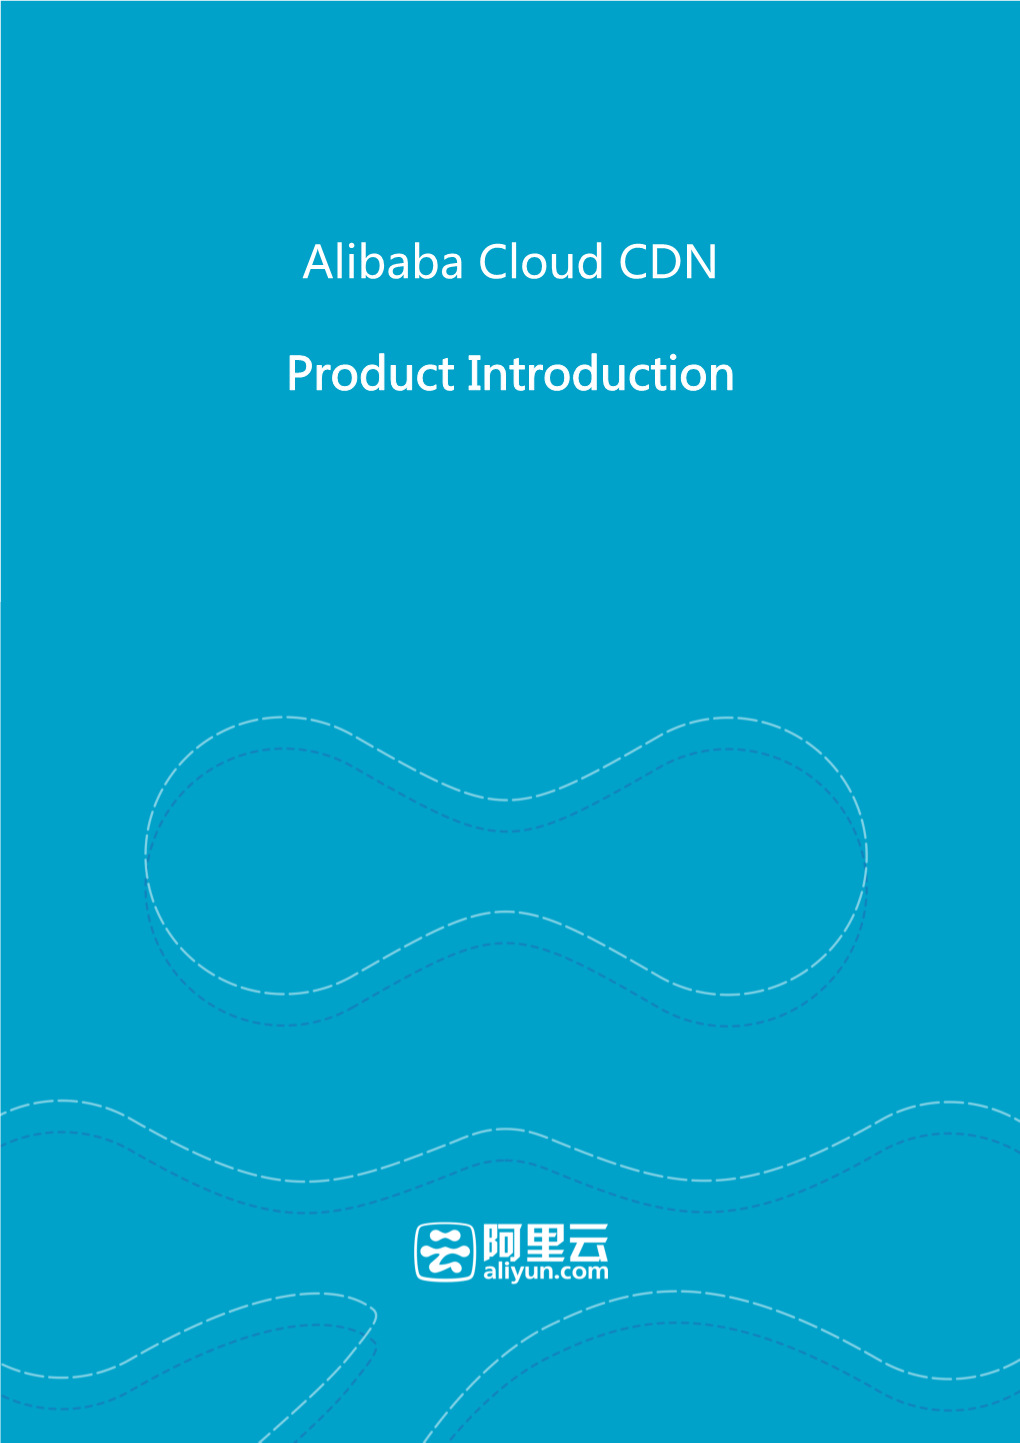 Alibaba Cloud CDN Product Introduction